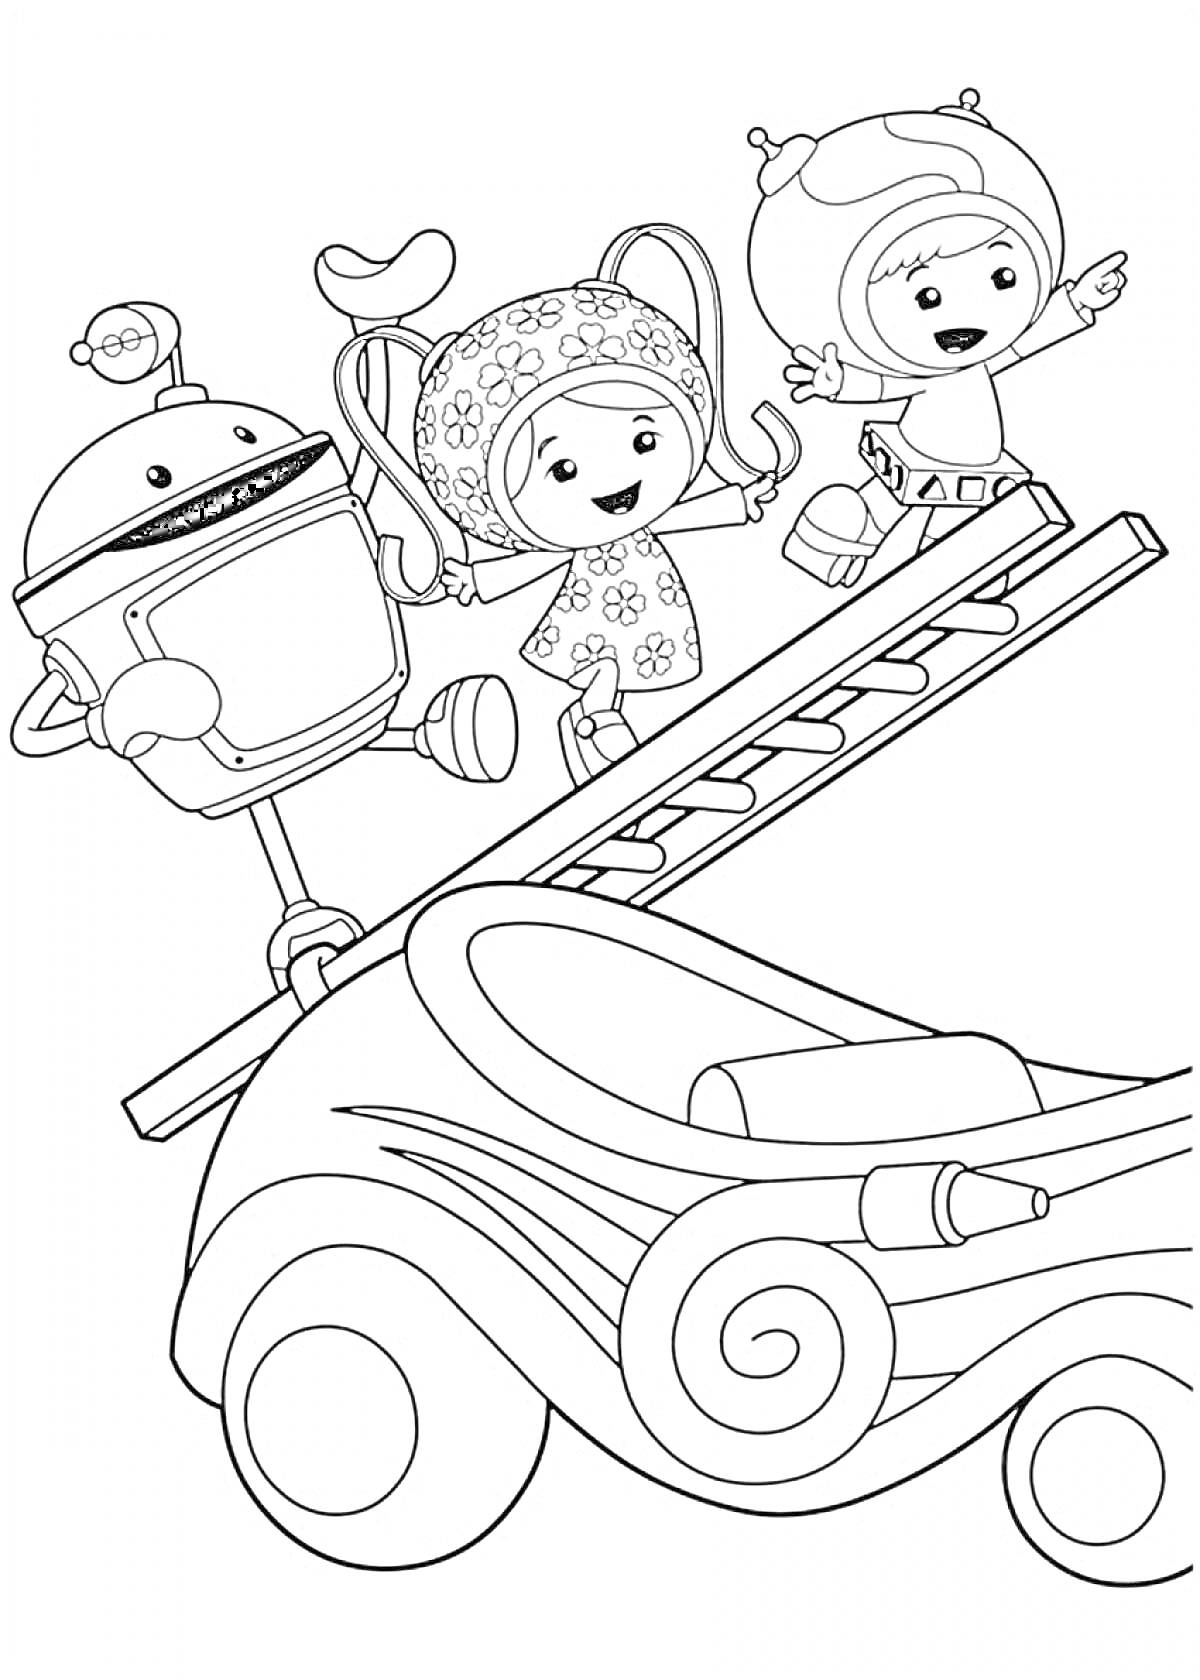 Раскраска Персонажи Умизуми с роботом на лестнице в машине